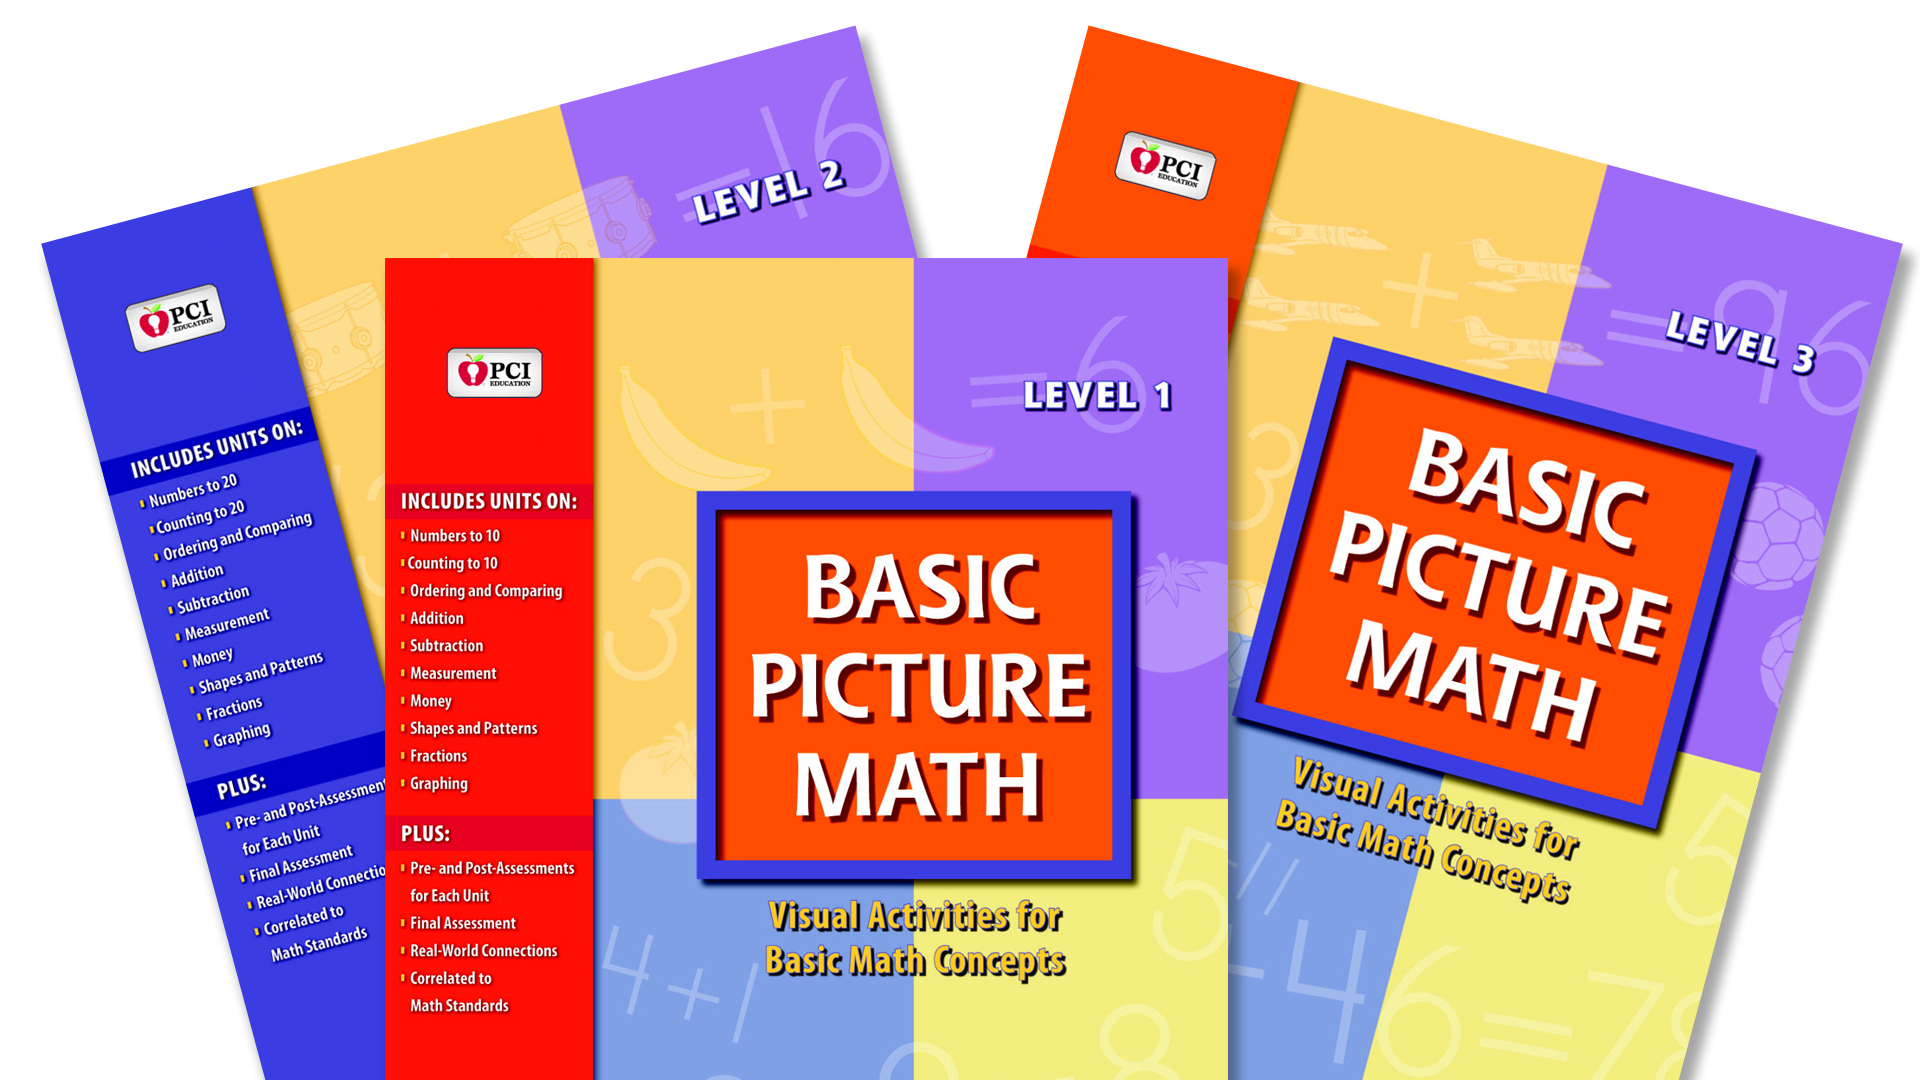 Книги для уровня b1. Basic Math Concepts. Basics picture. Book Level 3 Inter pdf. Multi Level book.